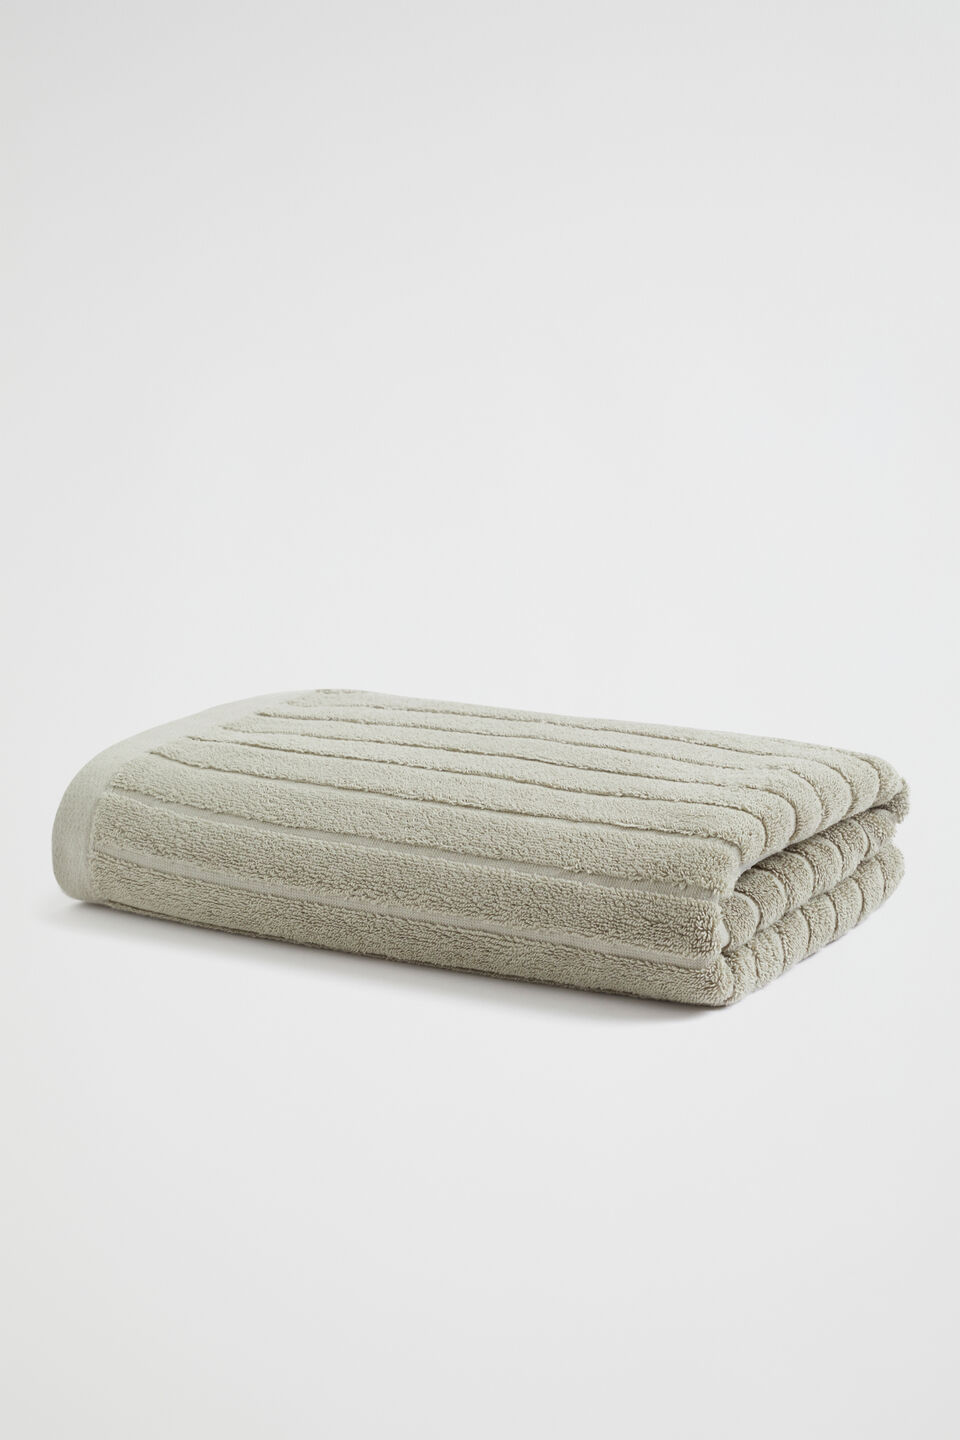 Cotton Stripe Bath Towel   Olive